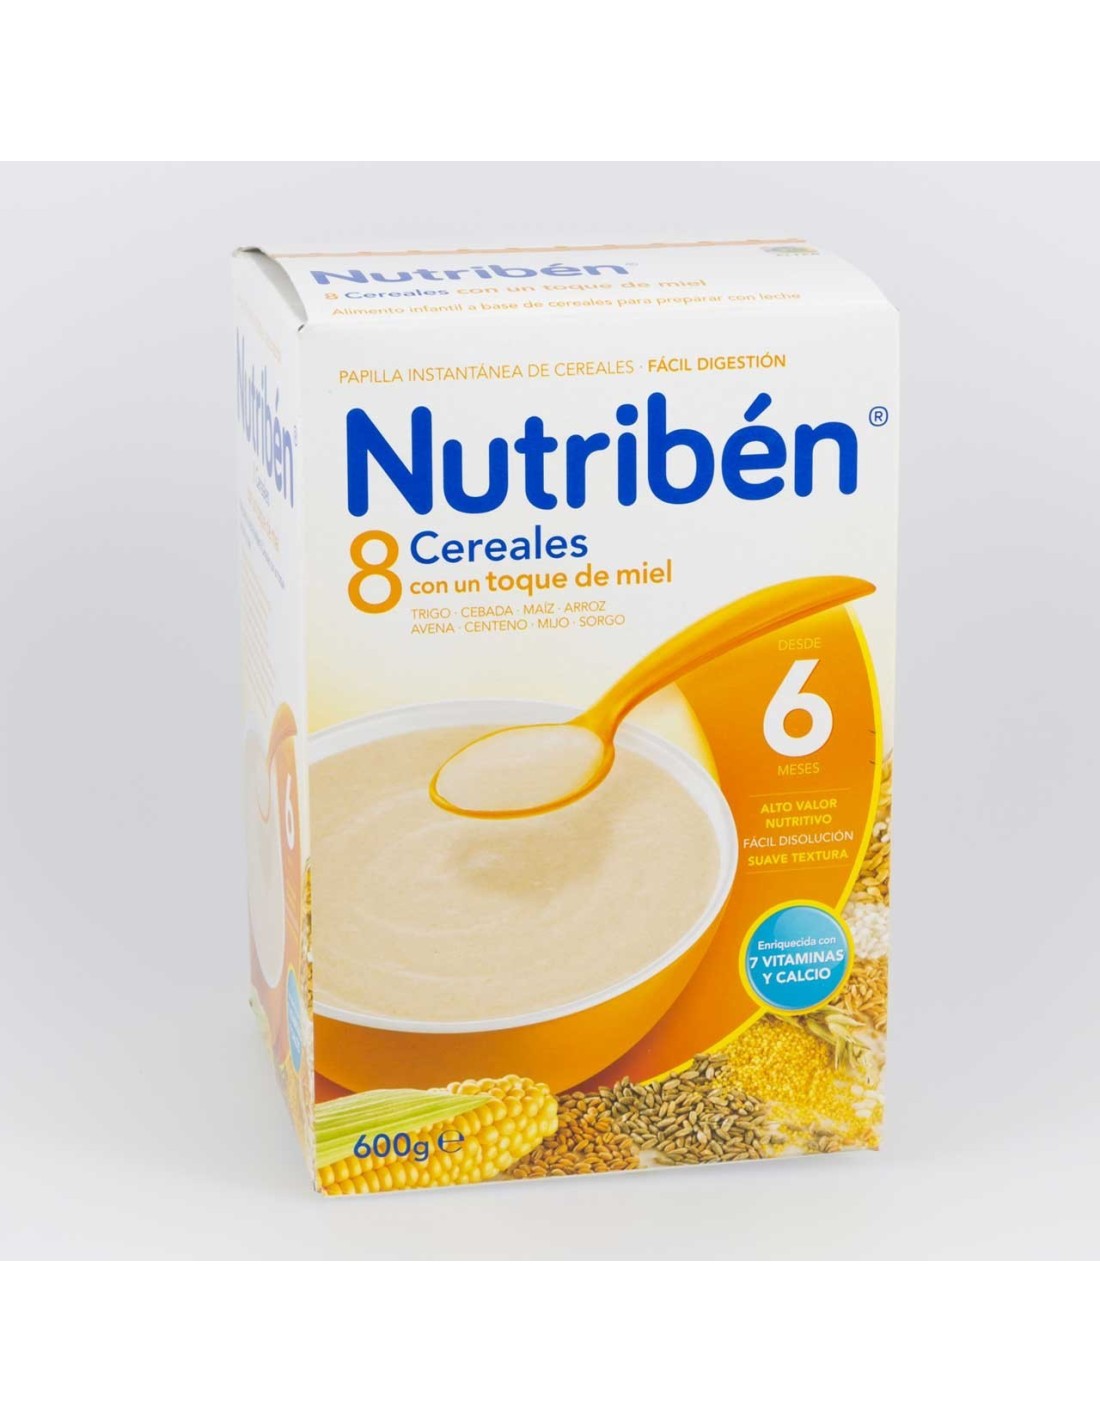 Nutribén 8 Cereales digest: Papilla de cereales para bebés